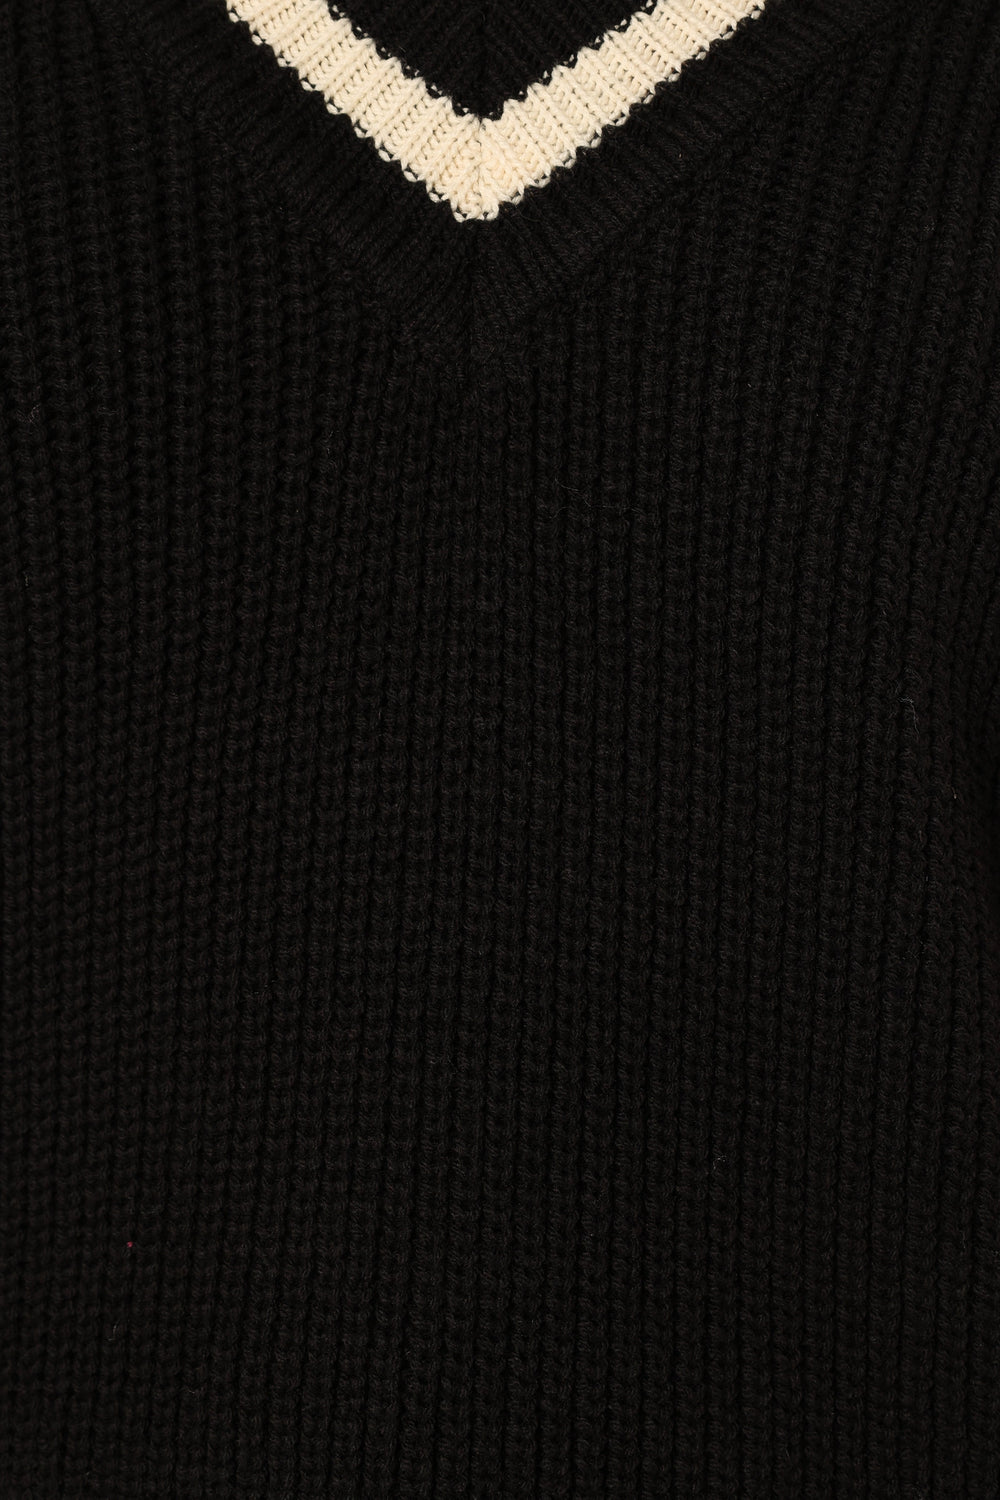 KNITWEAR @Dominique Contrast Vneck Knit Sweater - Black/Cream